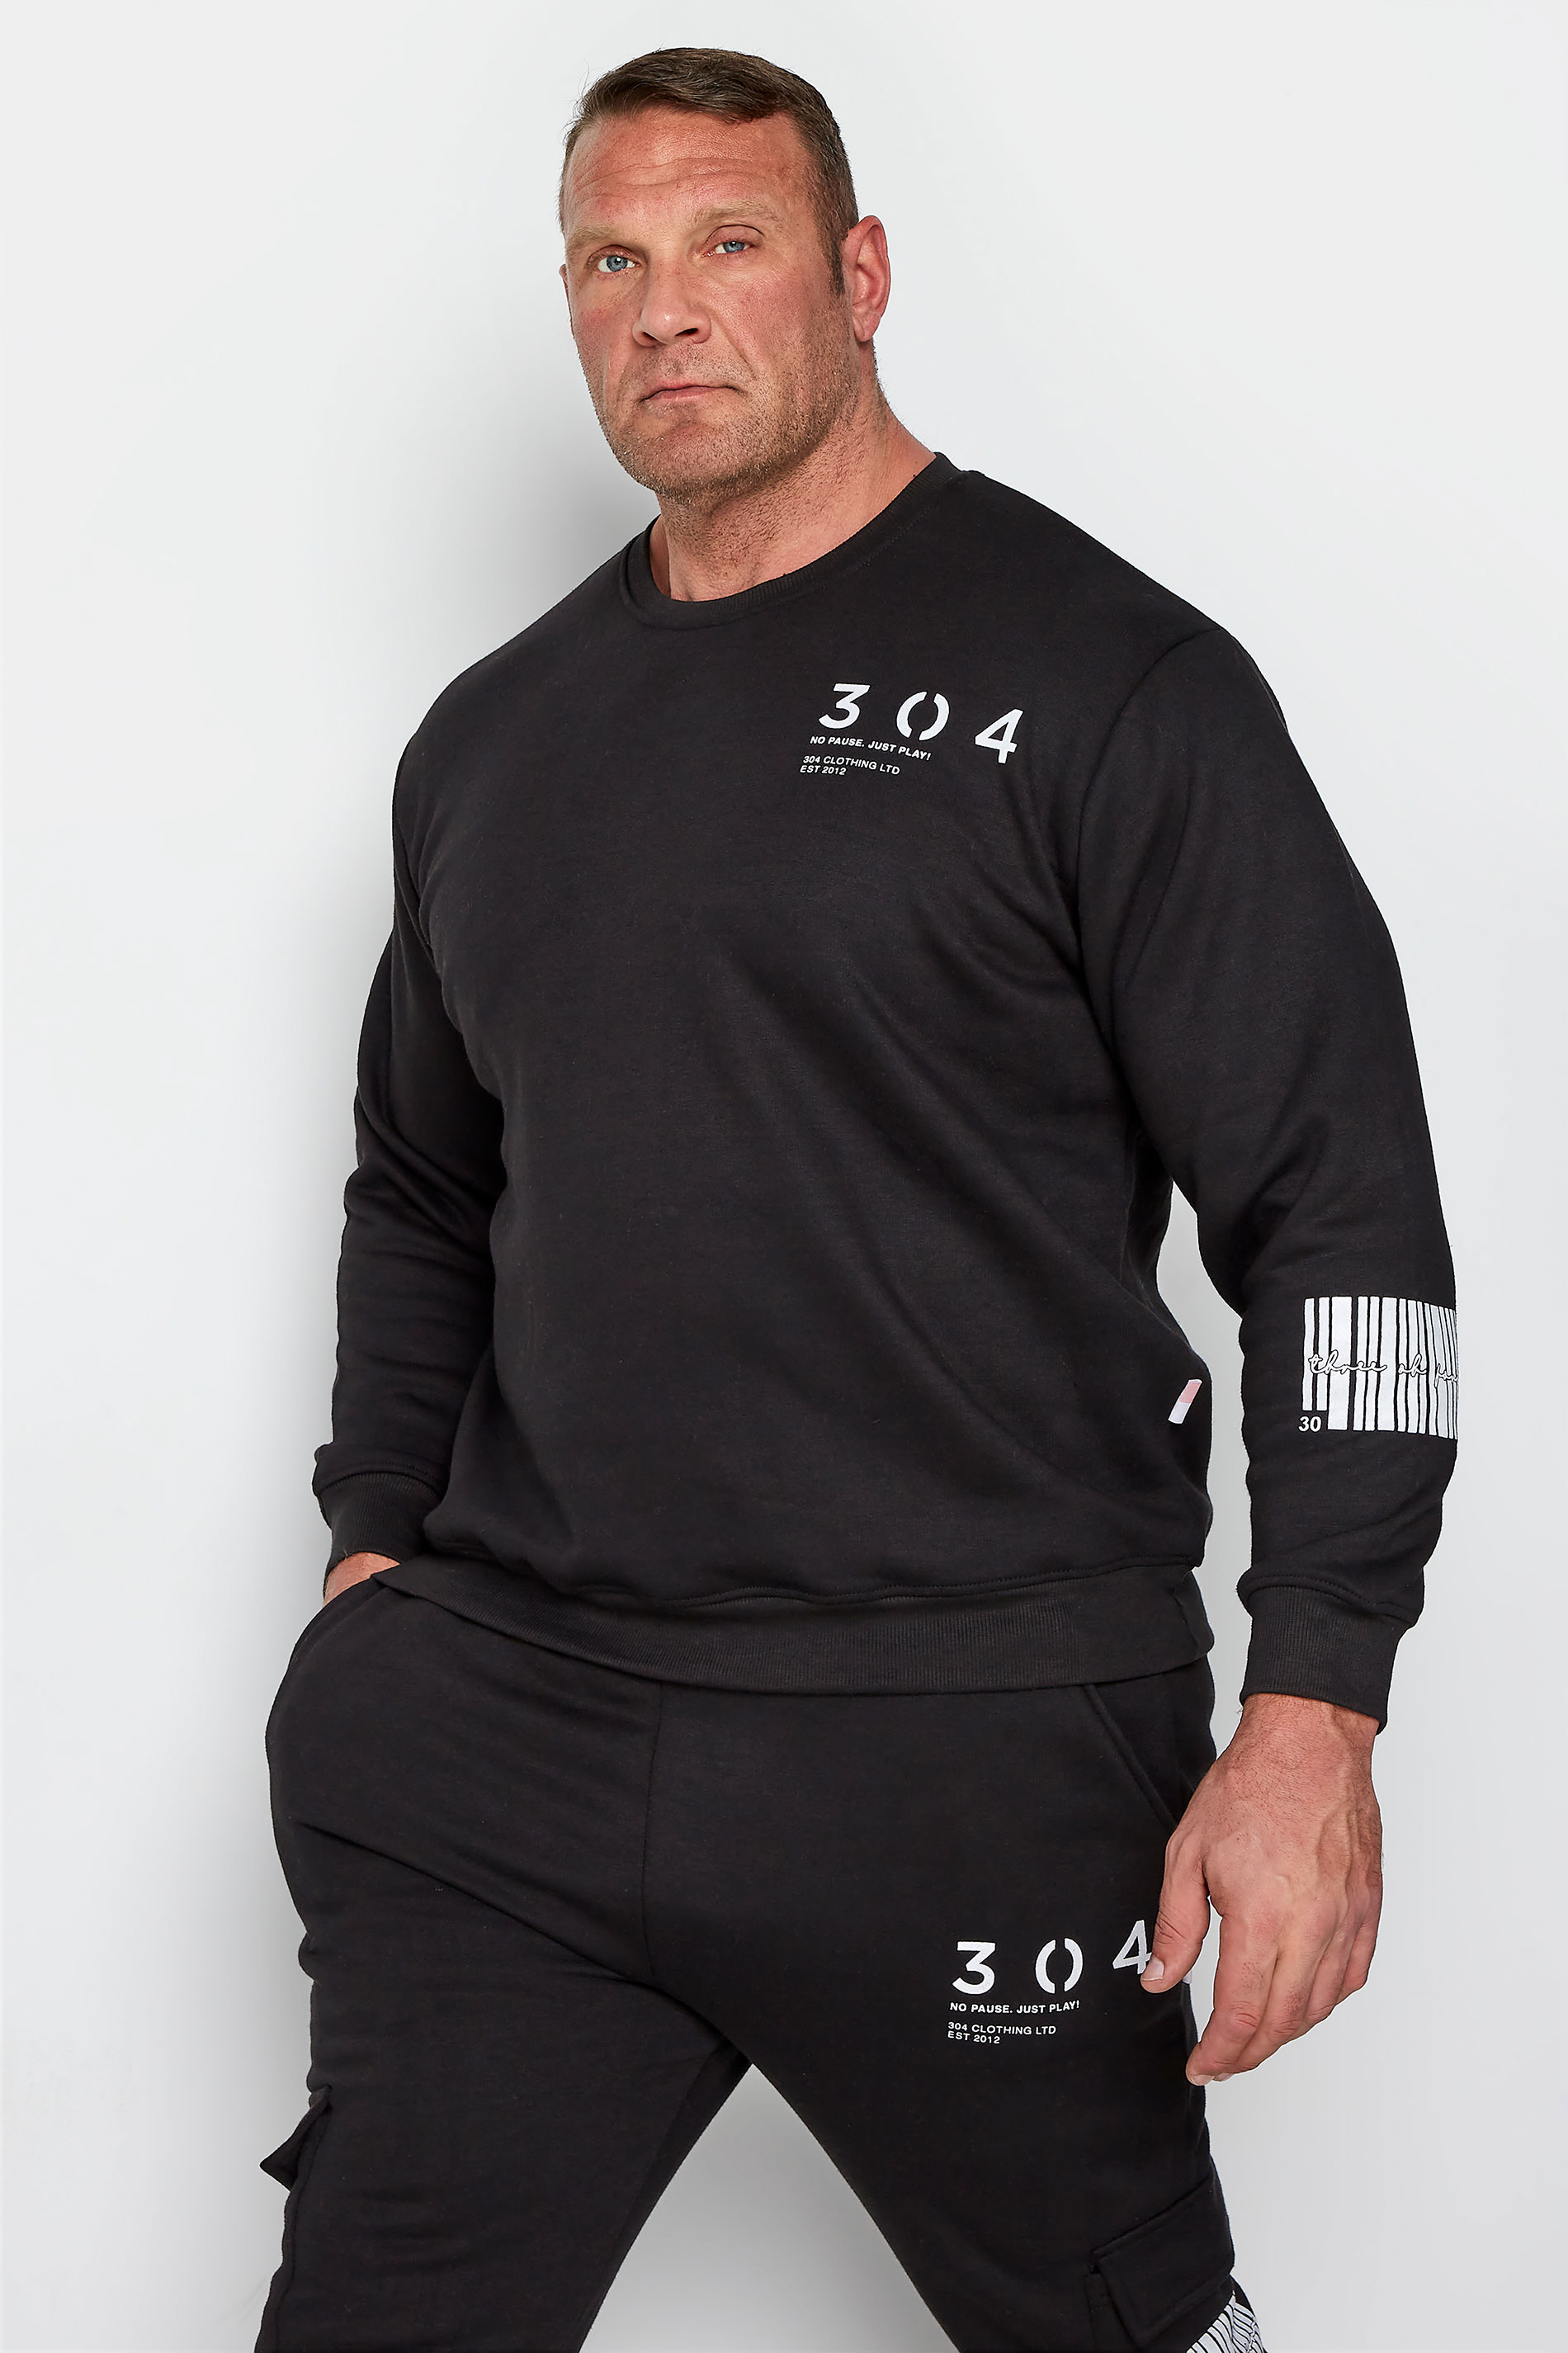 304 CLOTHING Big & Tall Black Barcode Sweatshirt 1